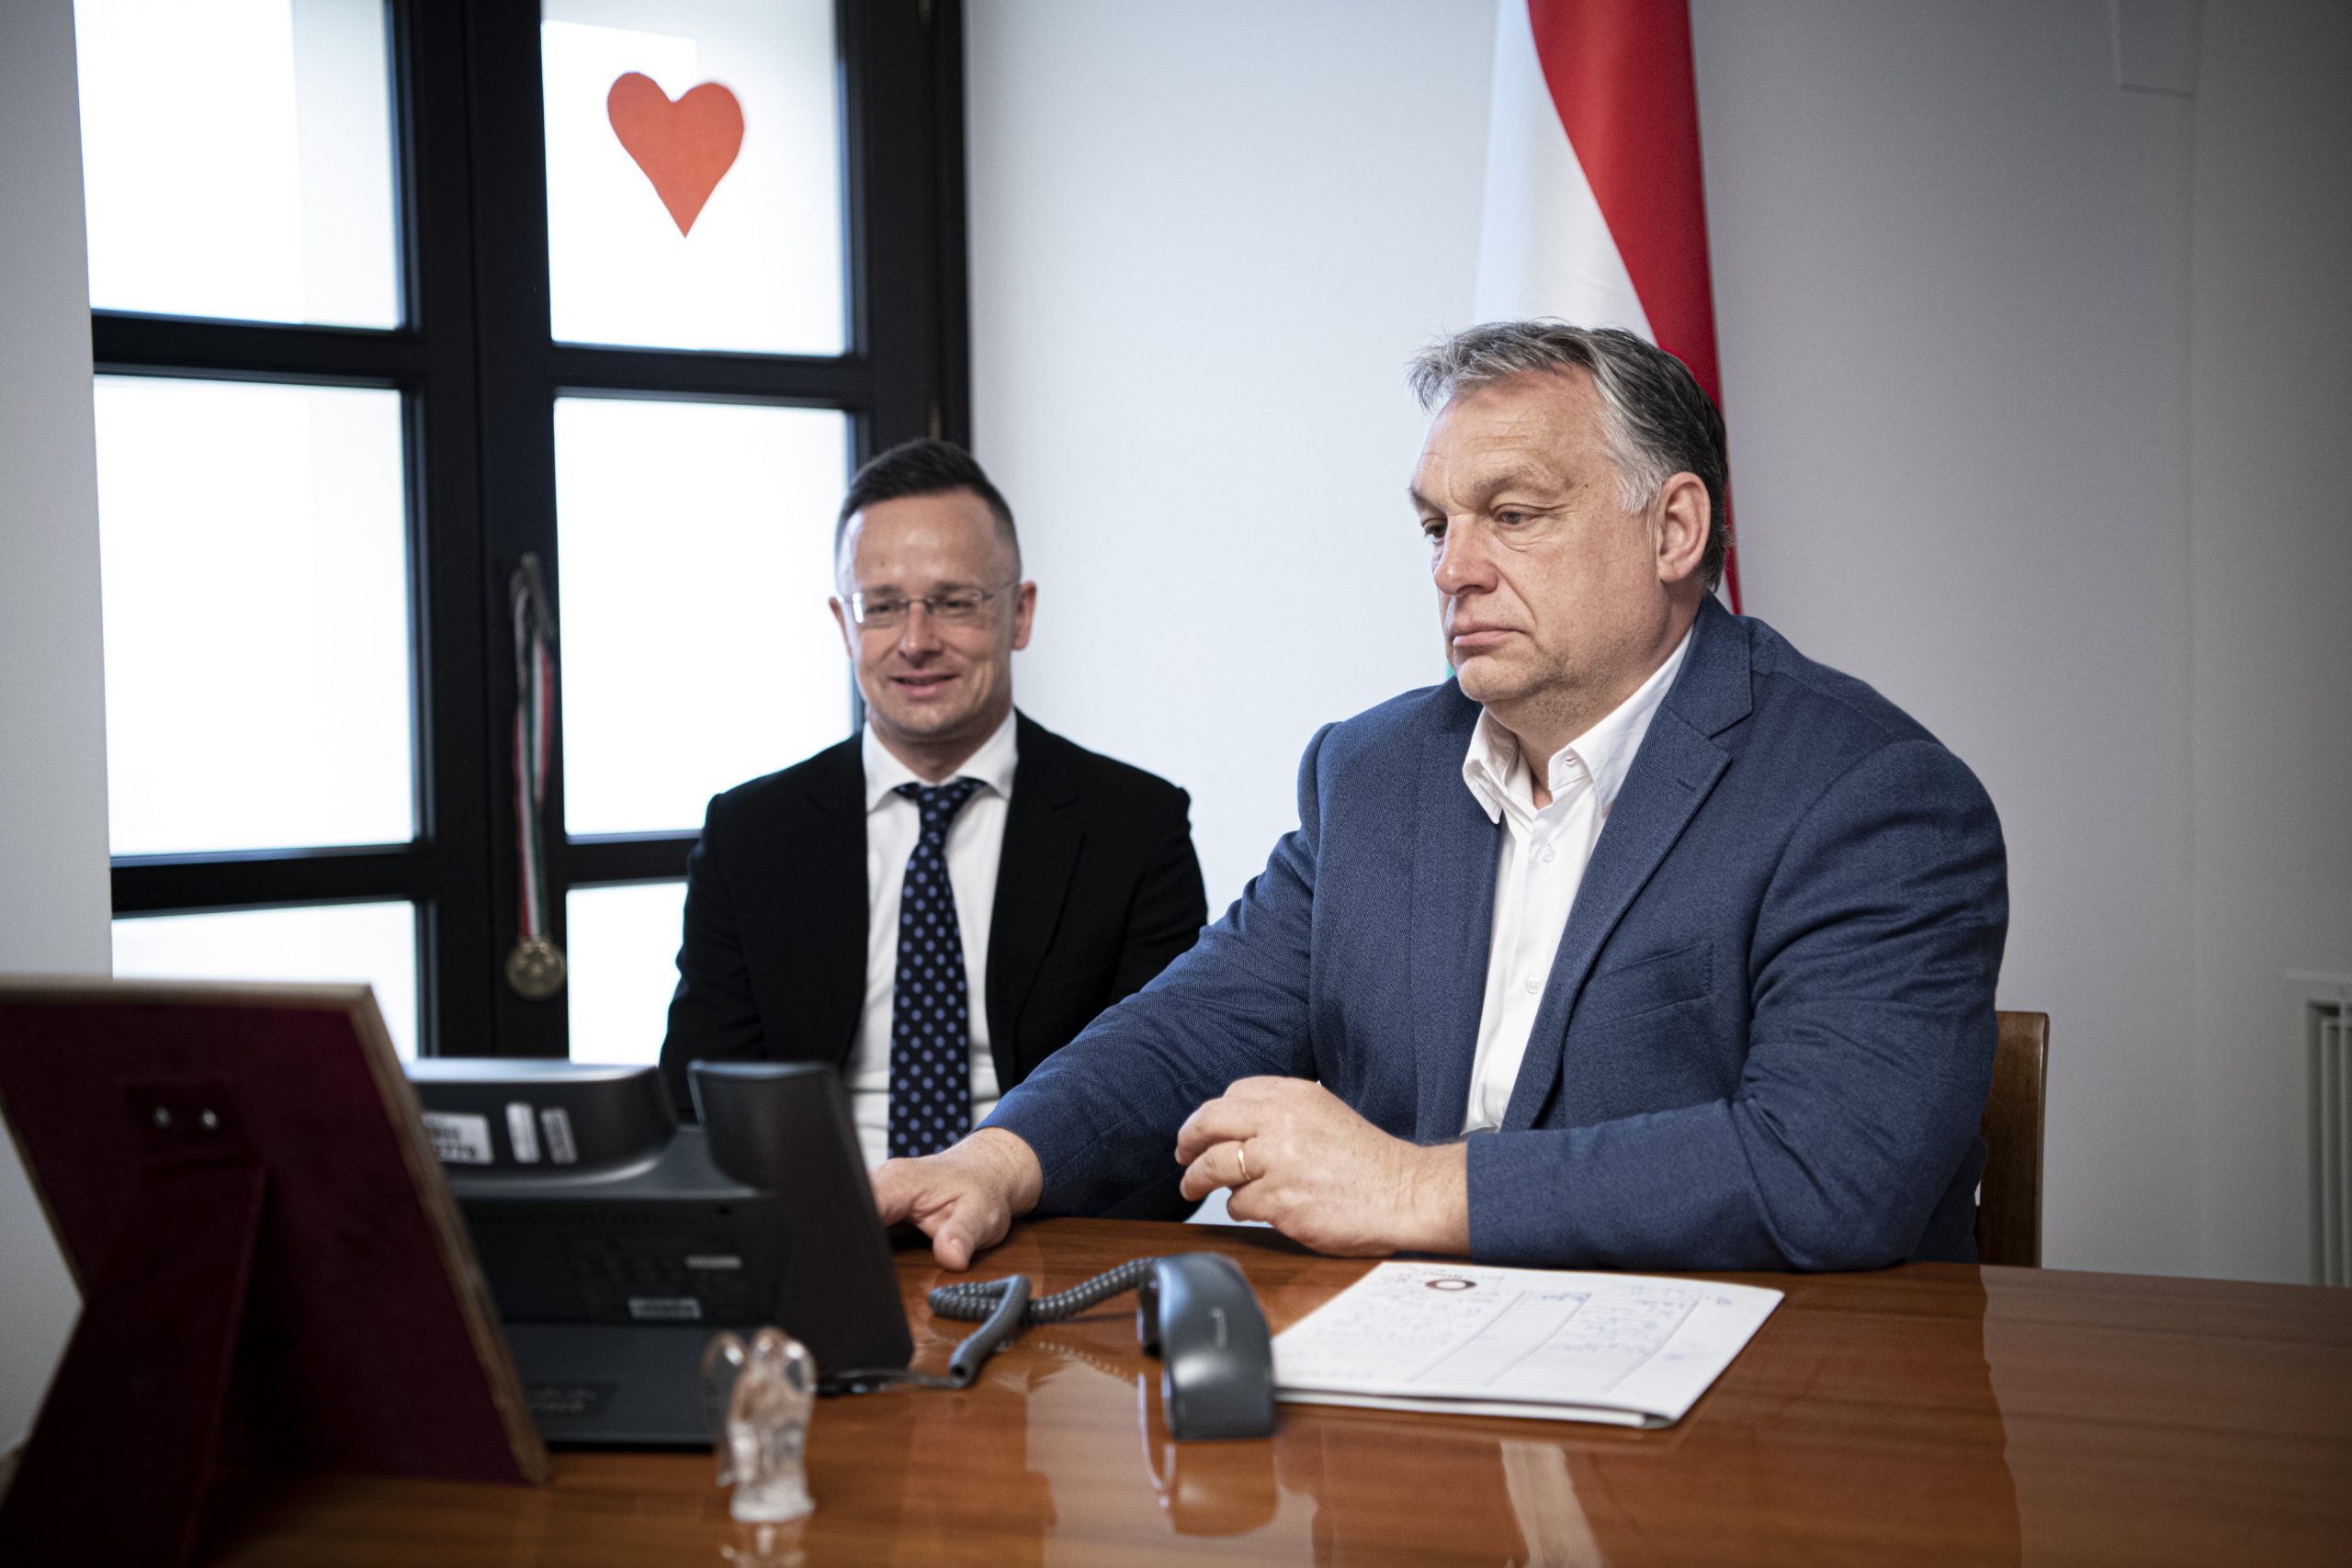 PM Orbán Wins 2021 